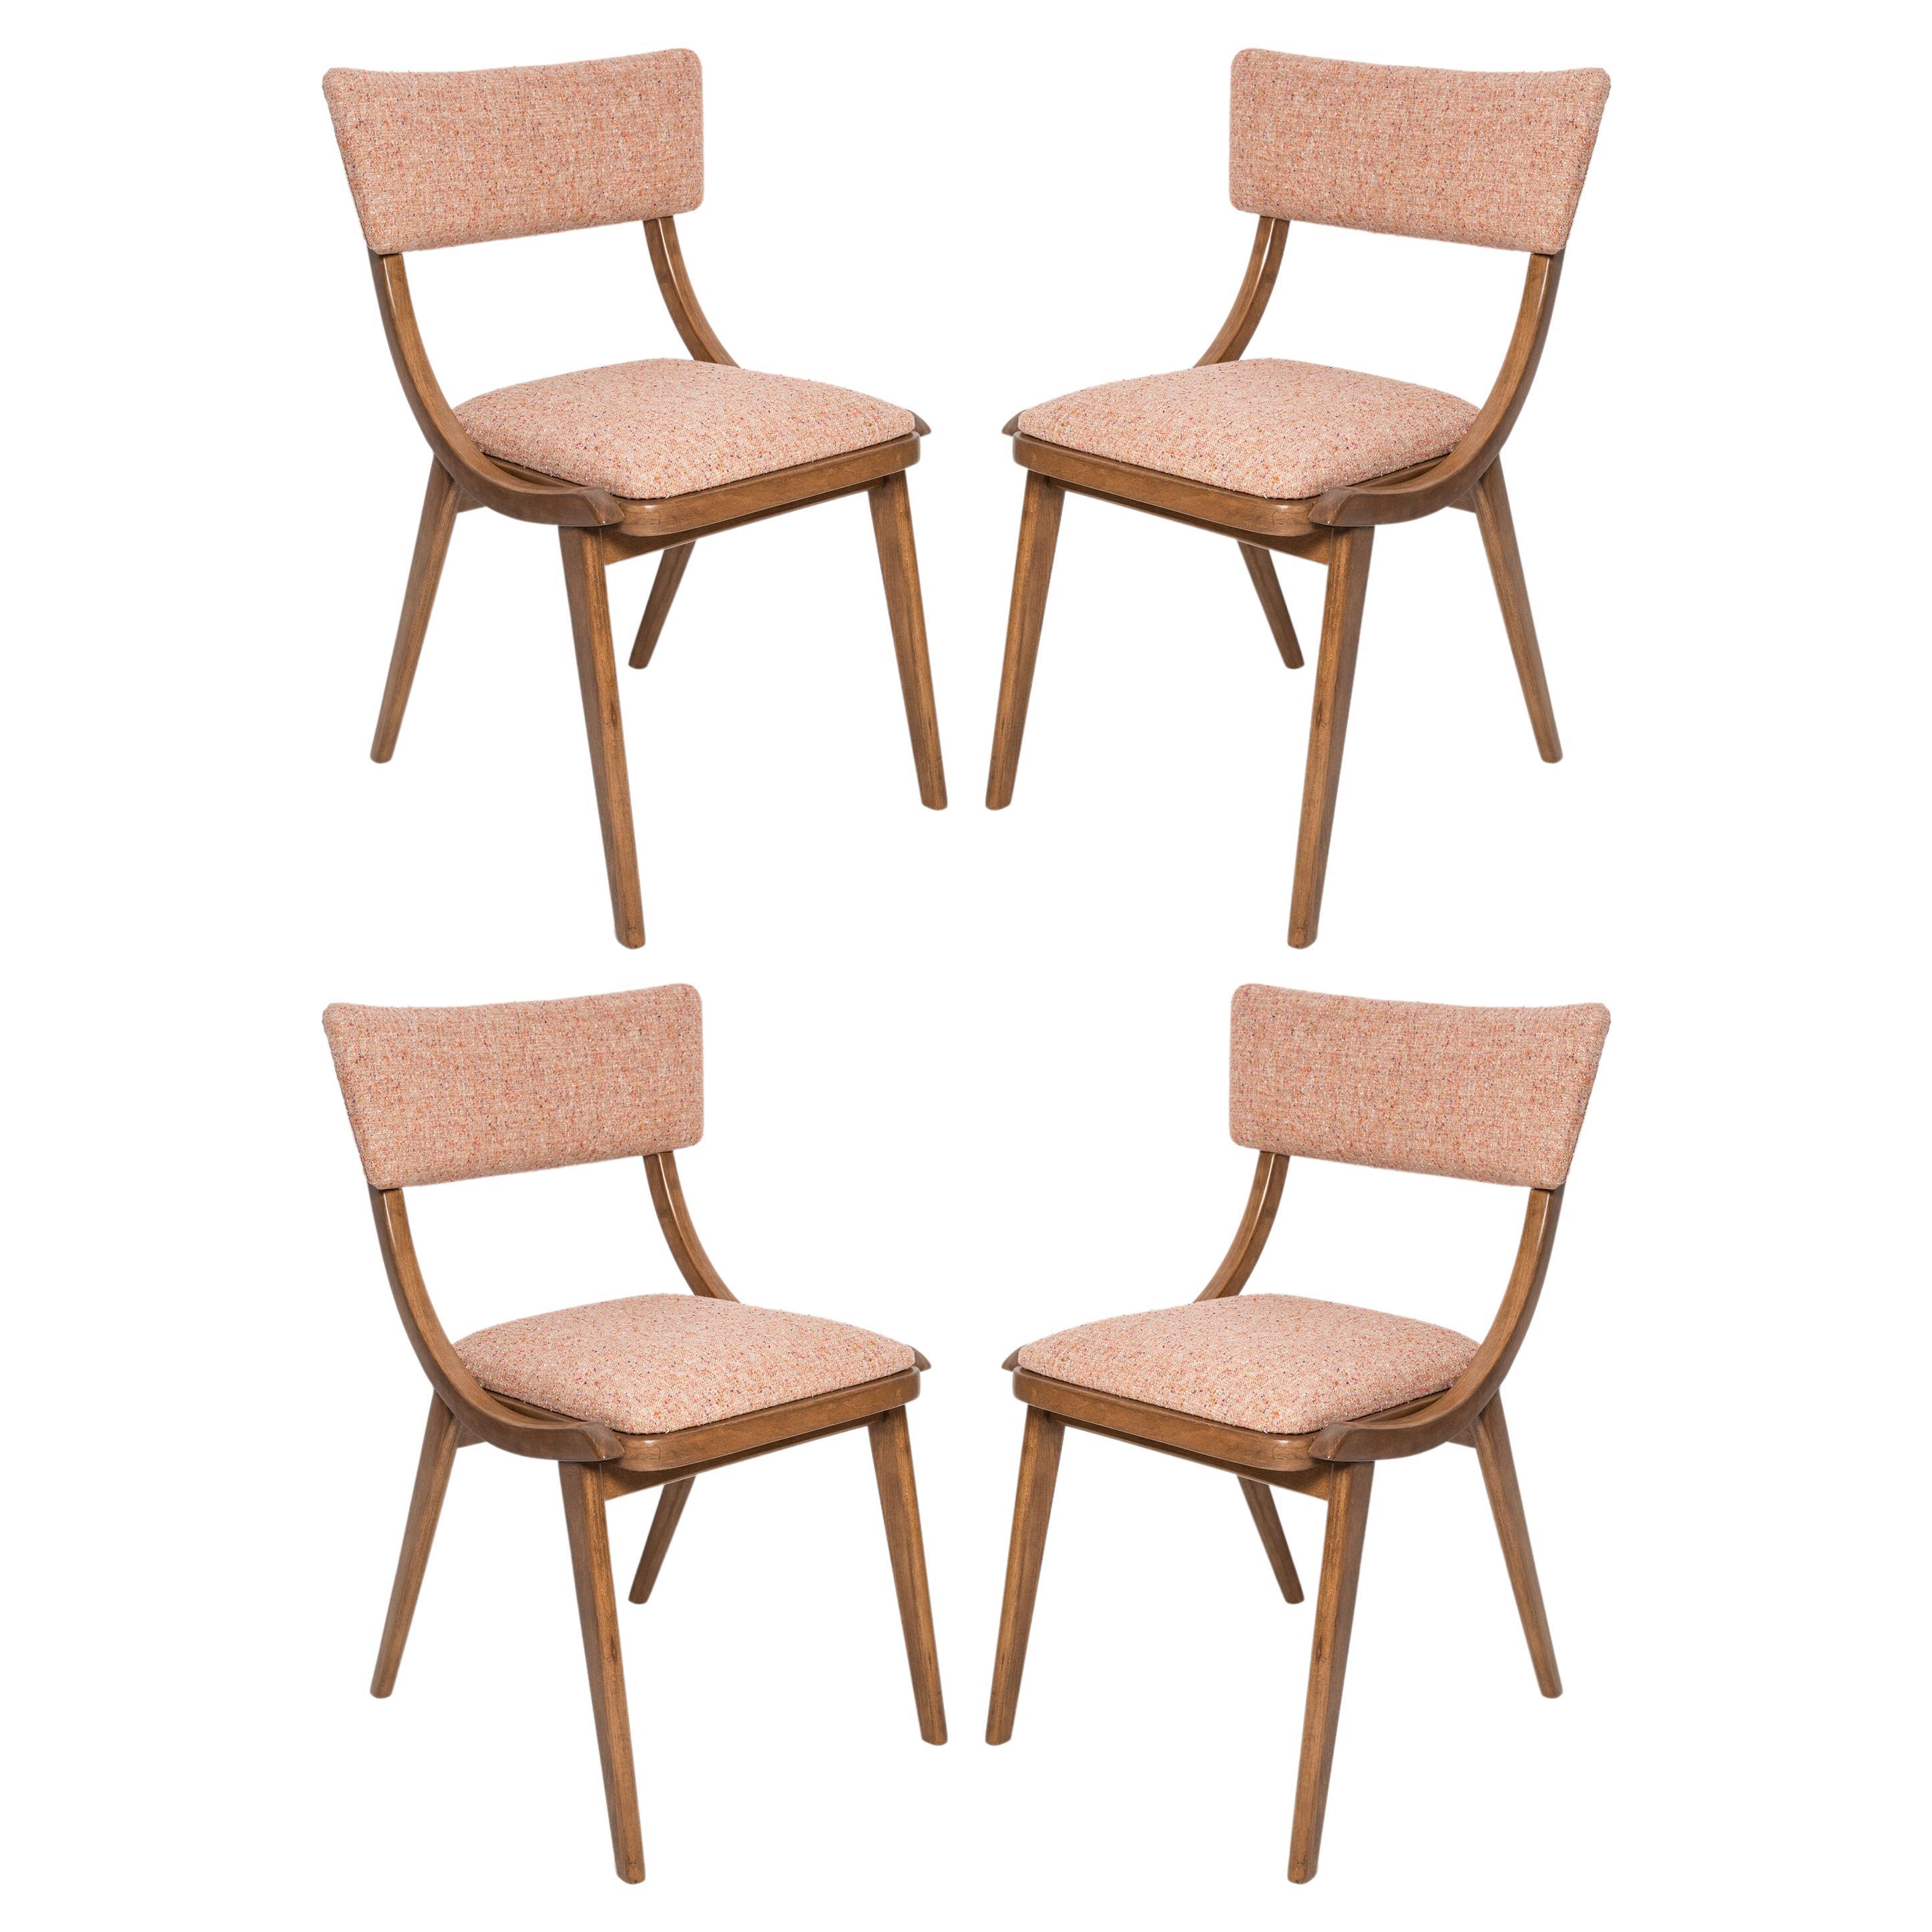 Set of Four Mid Century Modern Bumerang Chairs, Peach Orange Wool, Poland, 1960s